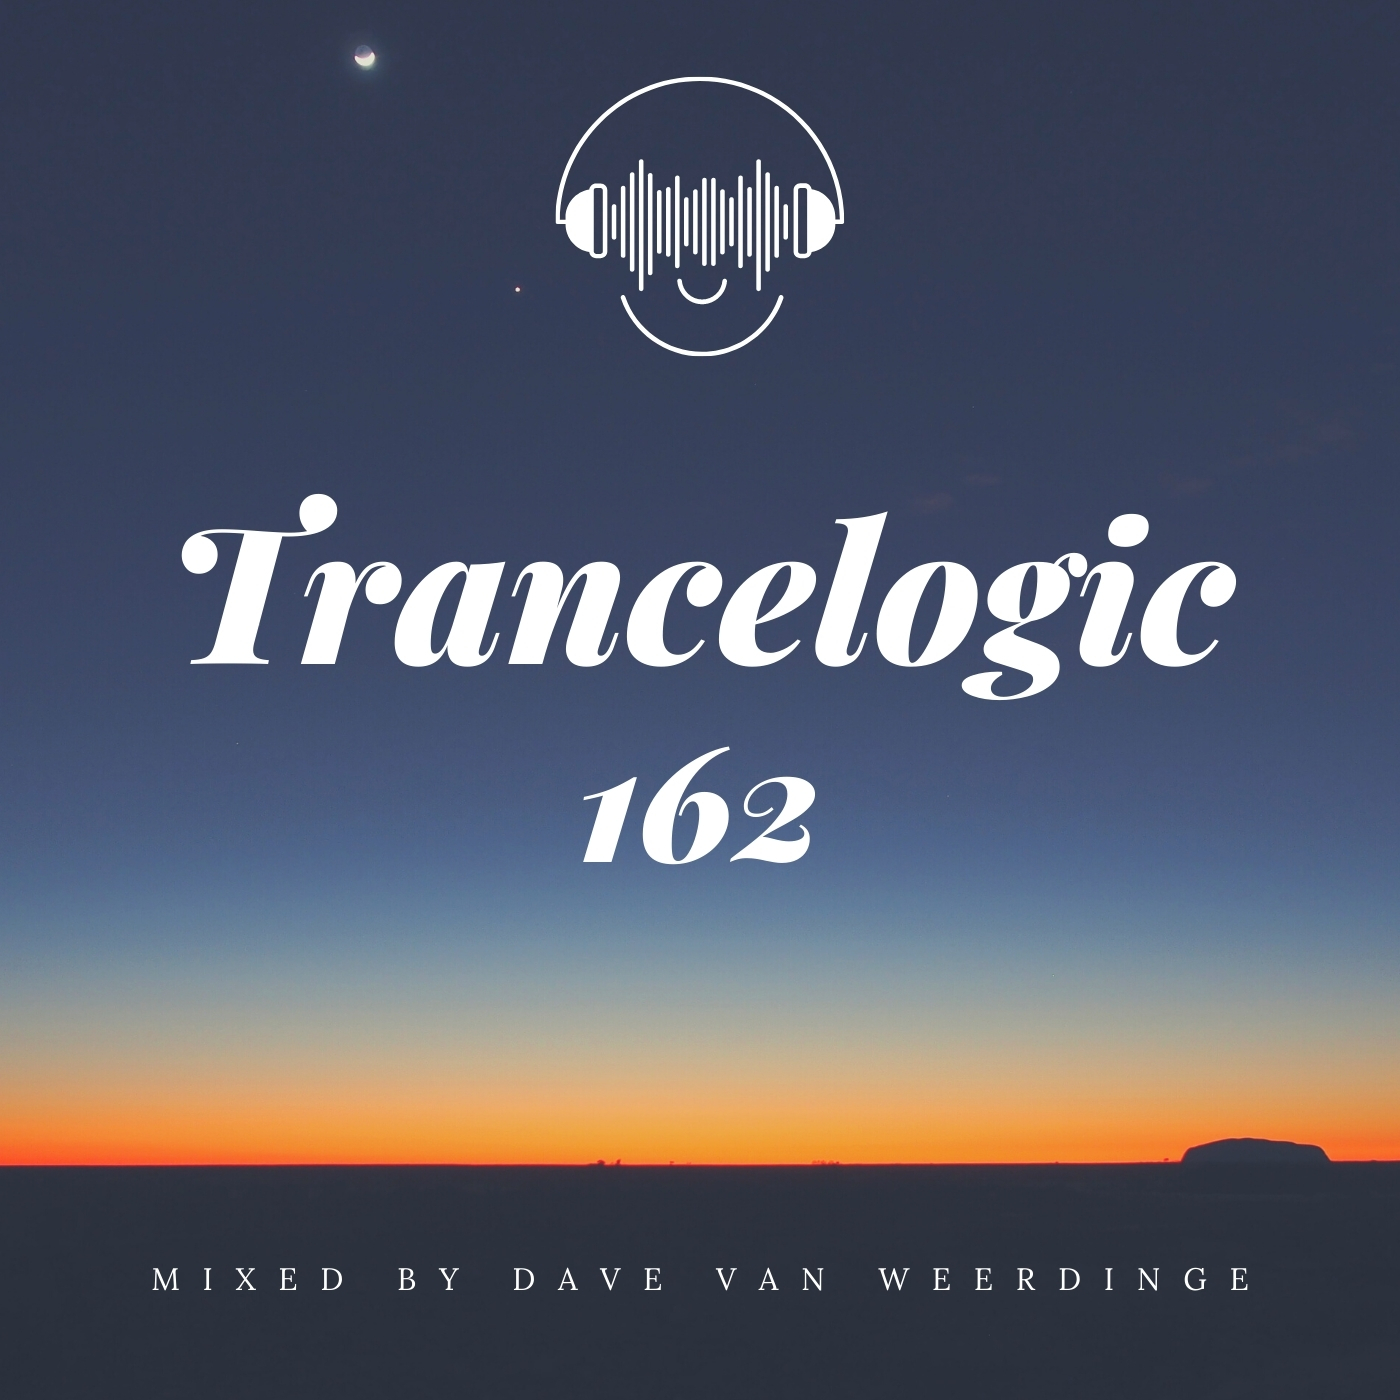 Trancelogic 162 by Dave van Weerdinge